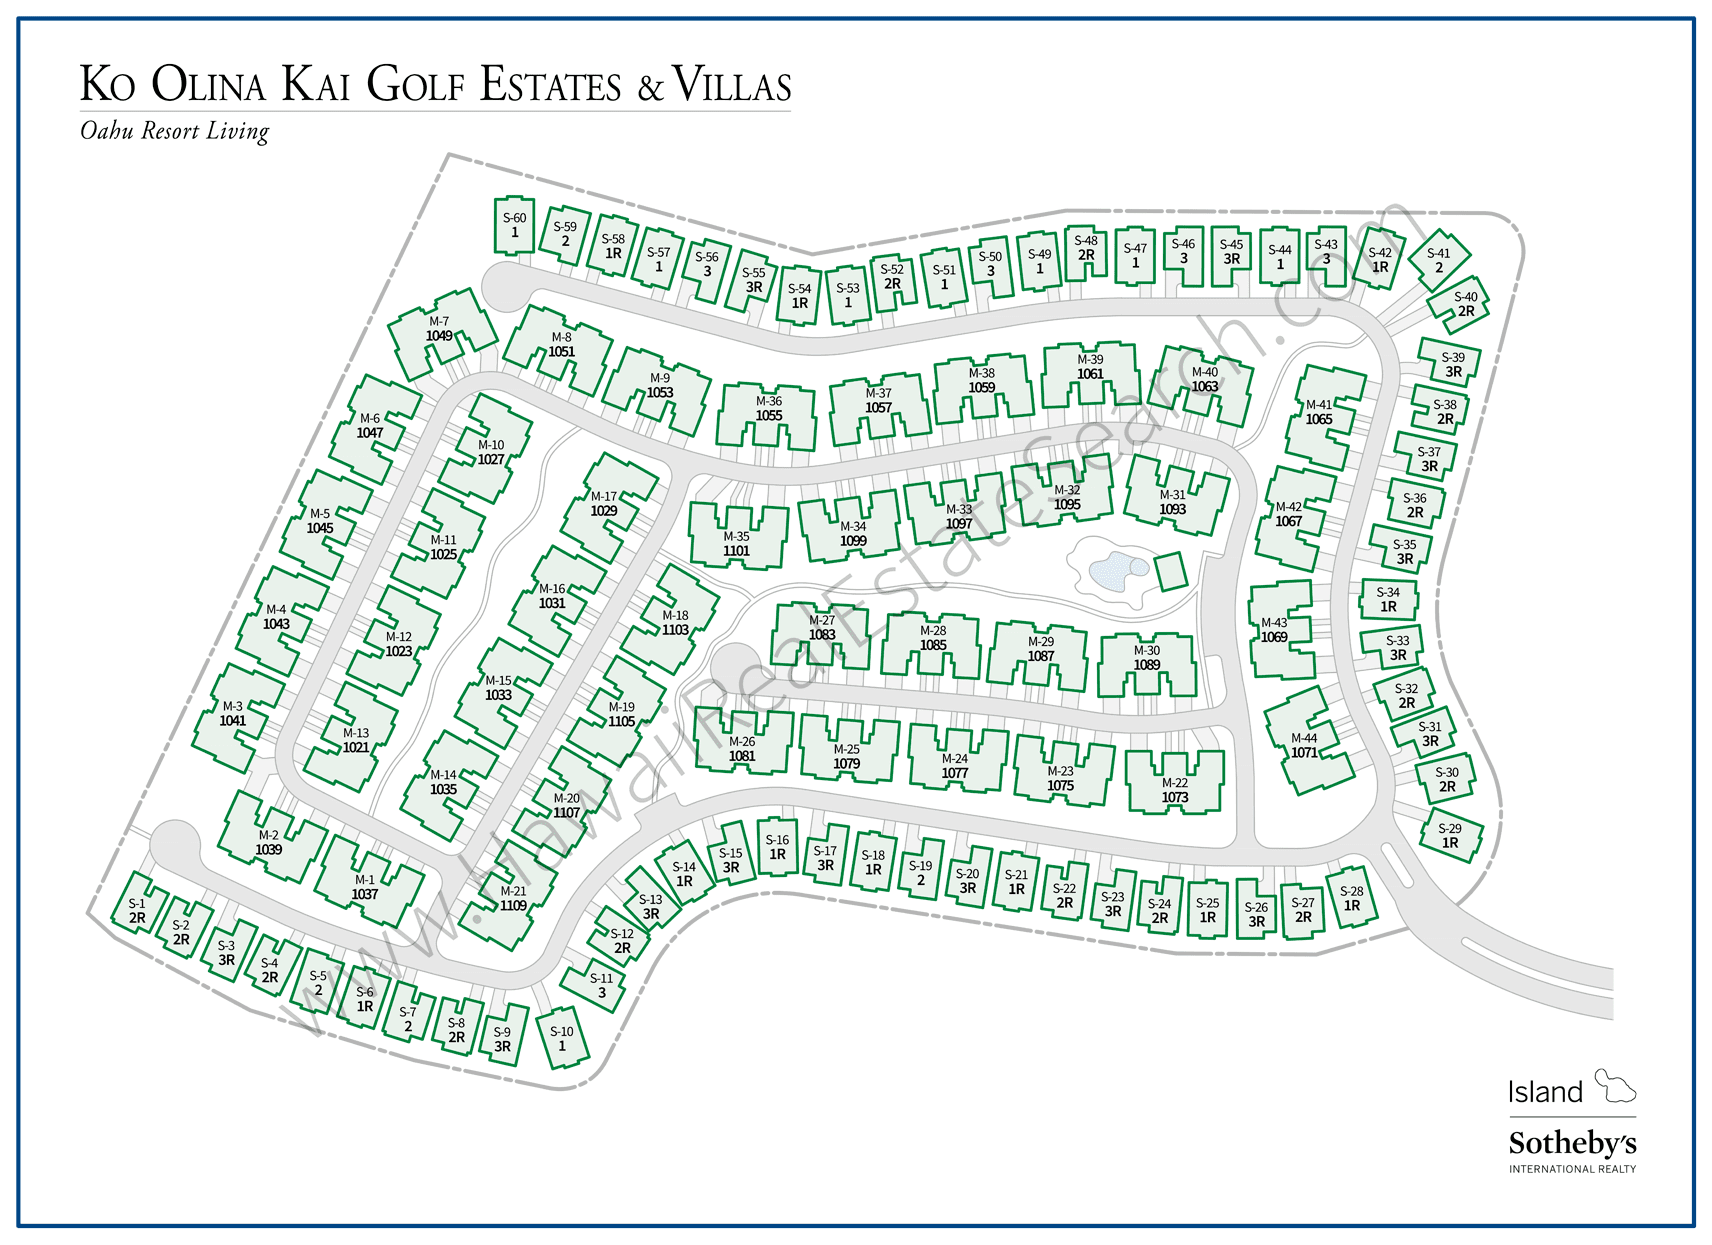 Ko Olina Kai Golf Estates and Villas Map